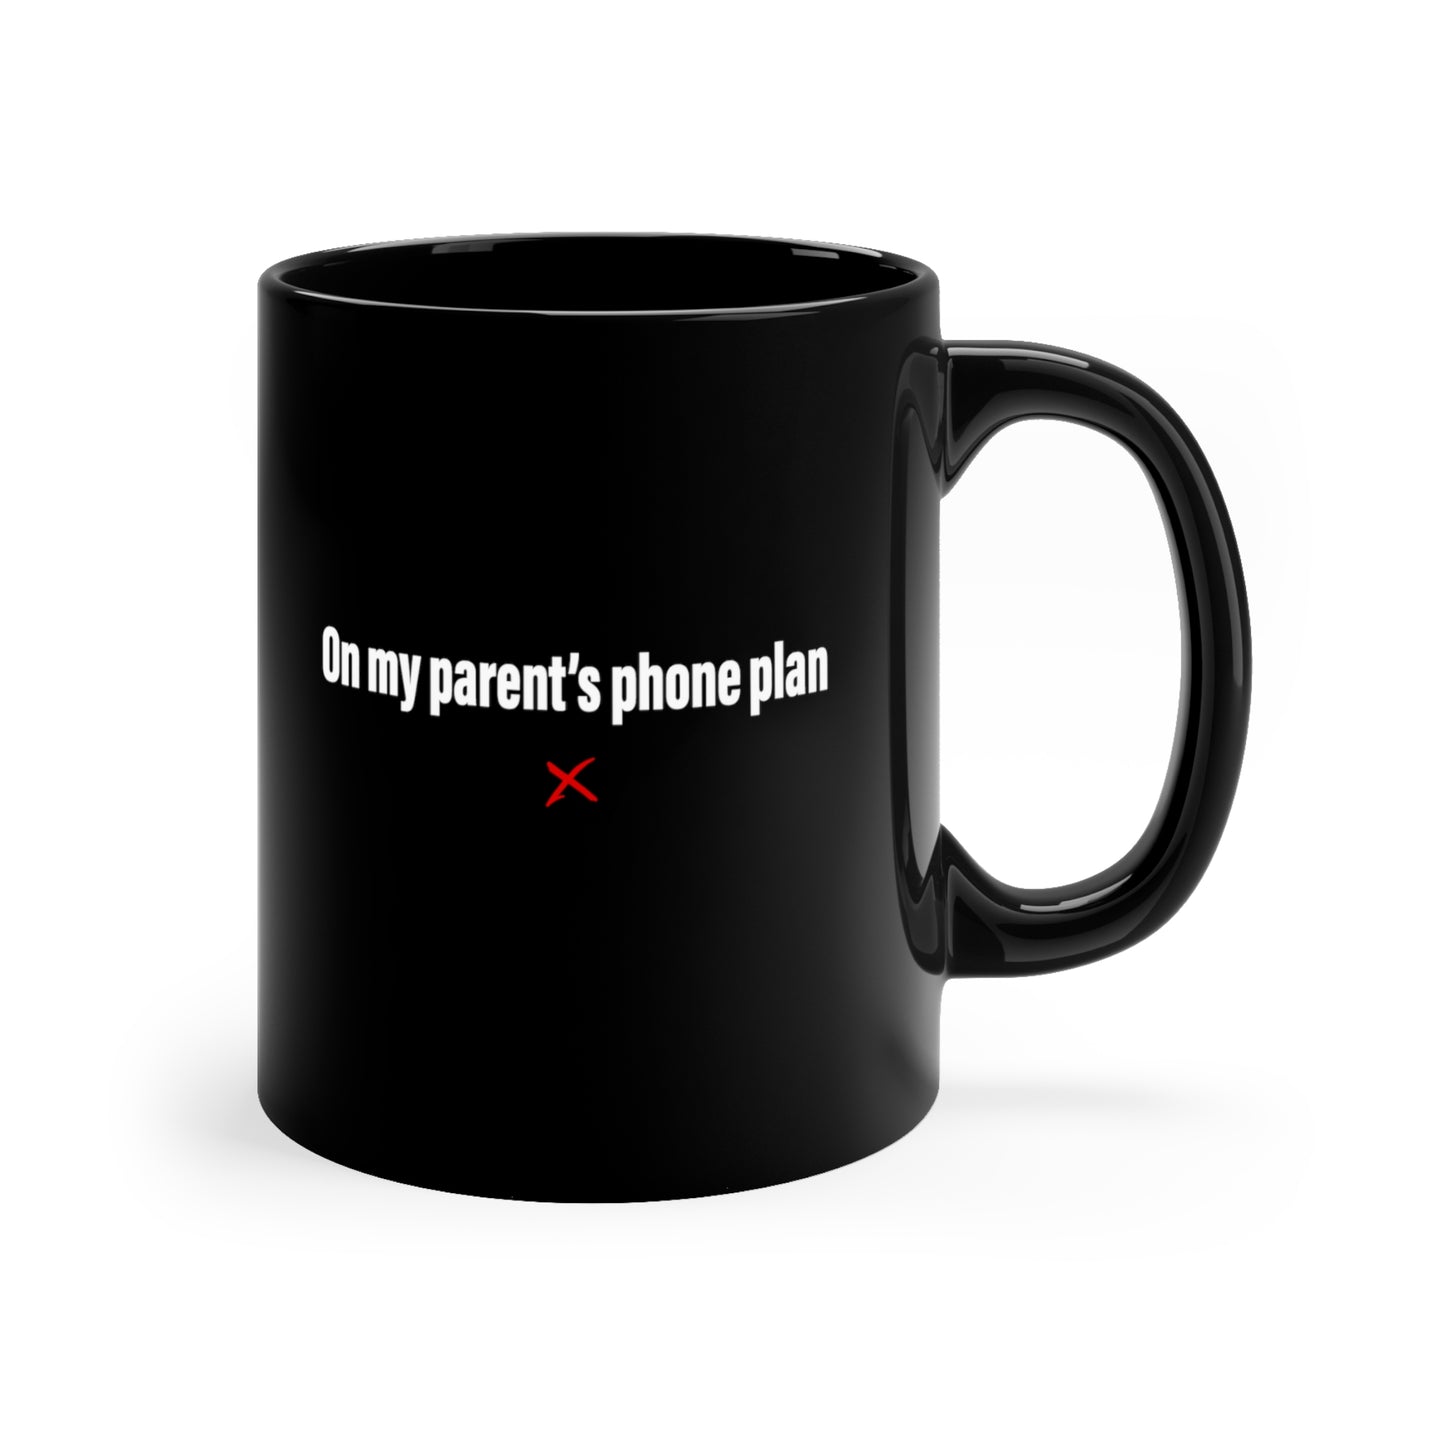 On my parent's phone plan - Mug